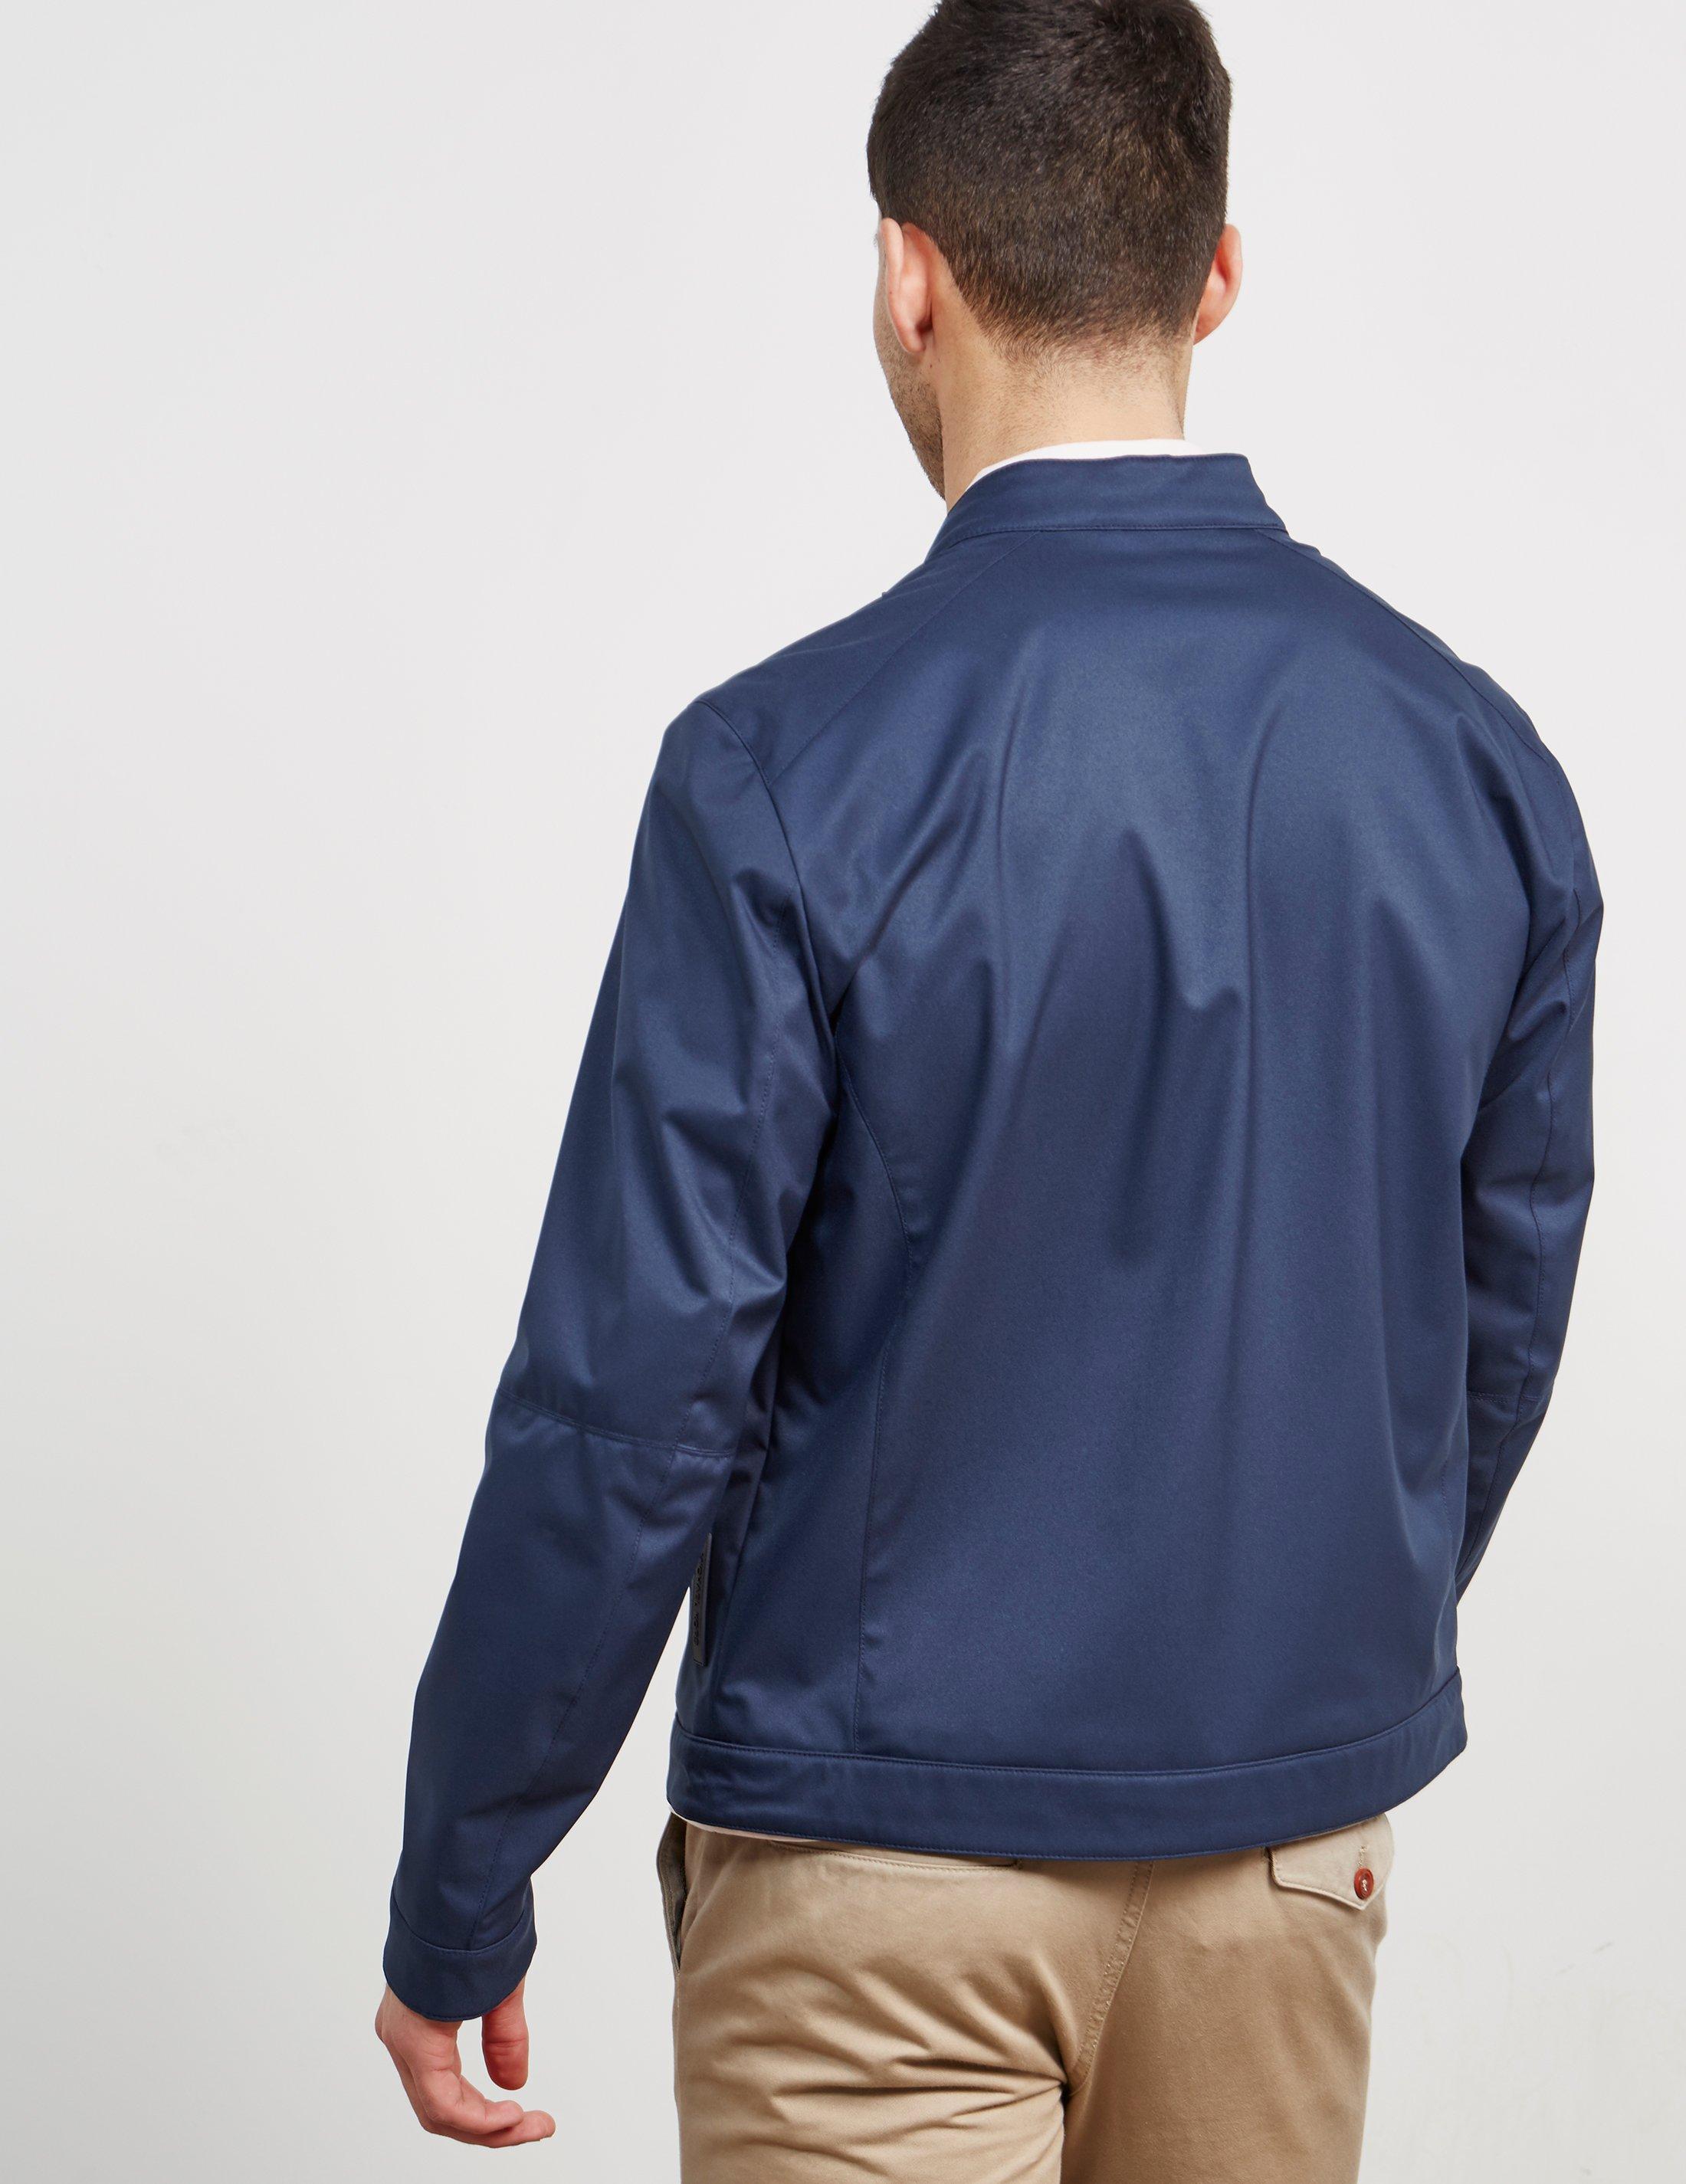 Michael Kors Soft Harrington Jacket Navy Blue for Men | Lyst